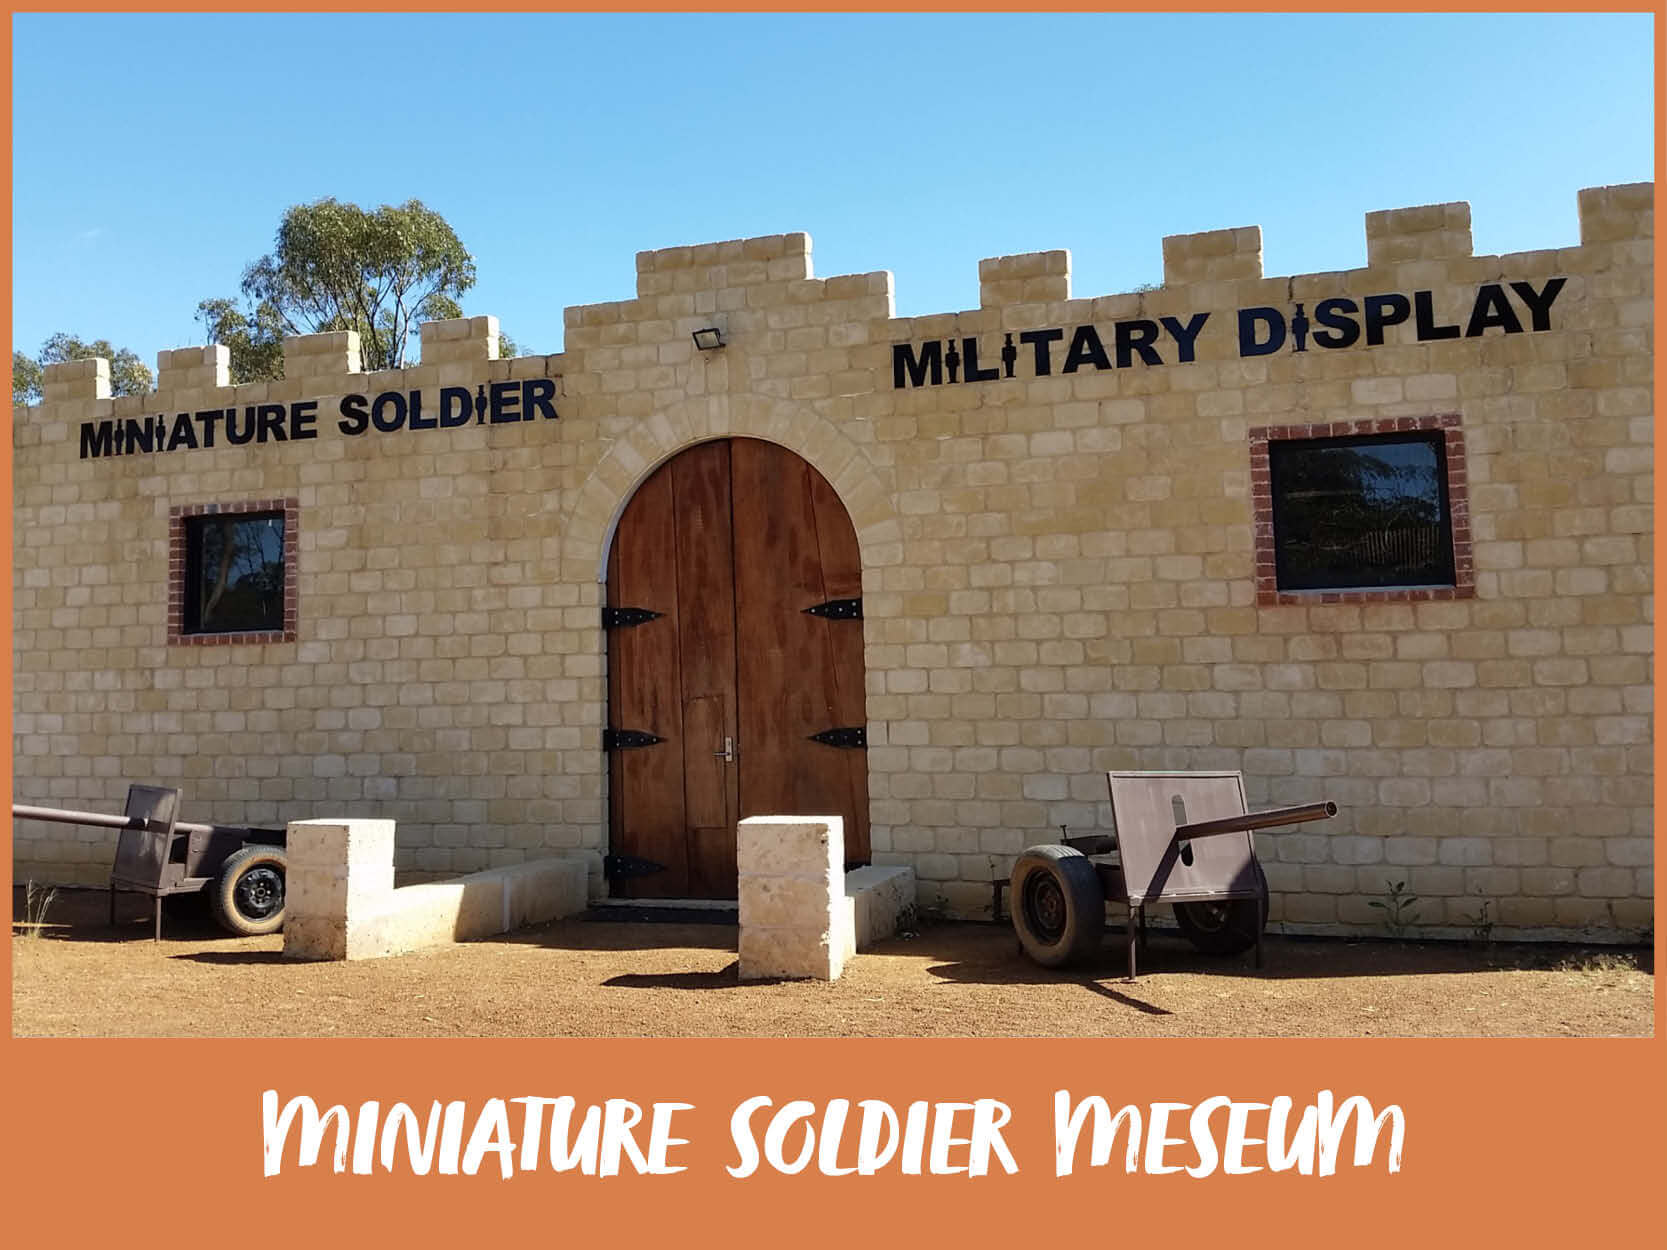 Miniature Soldier Museum